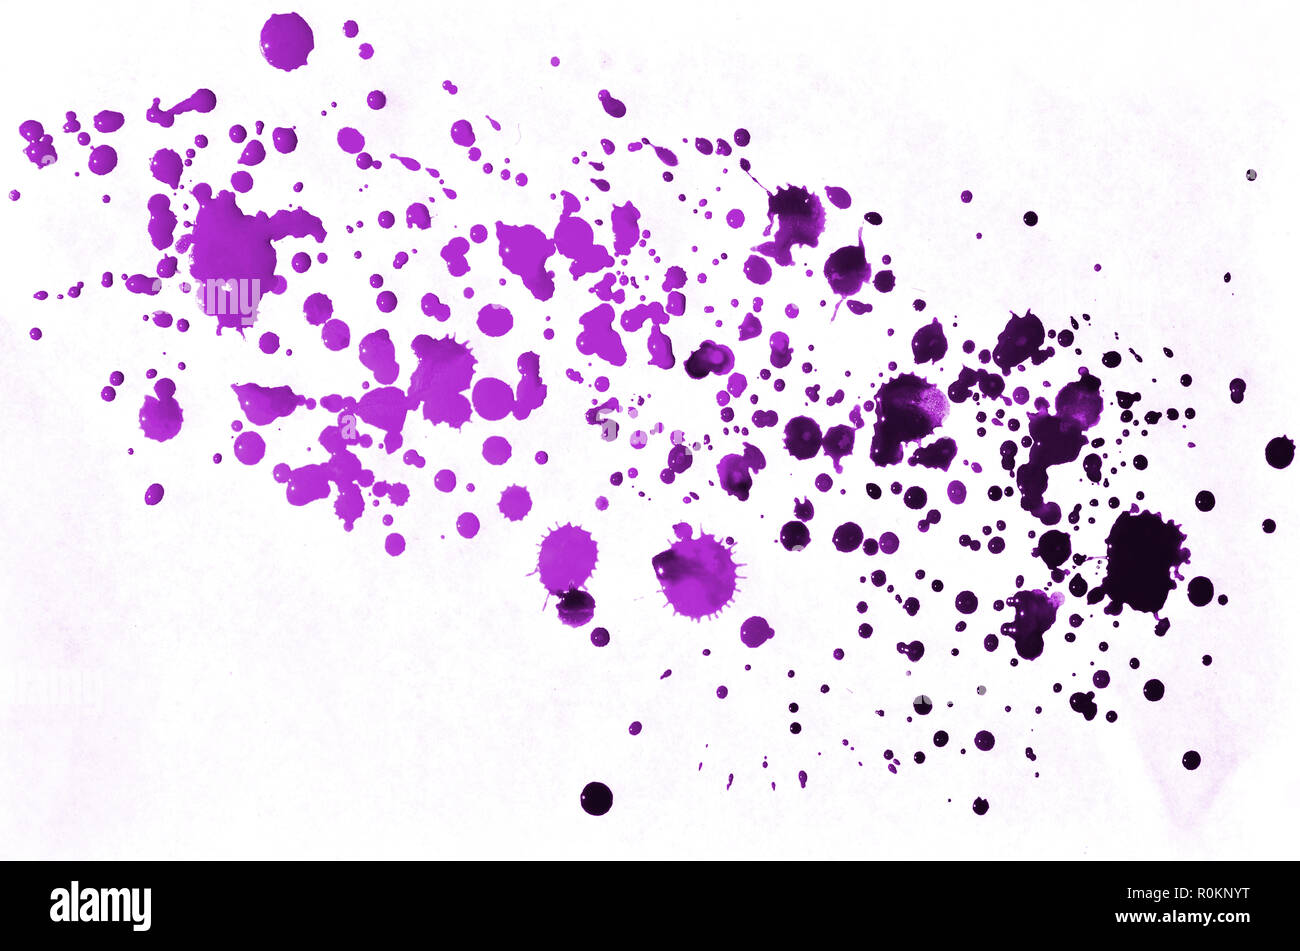 Purple Paint Splatter Images - Free Download on Freepik